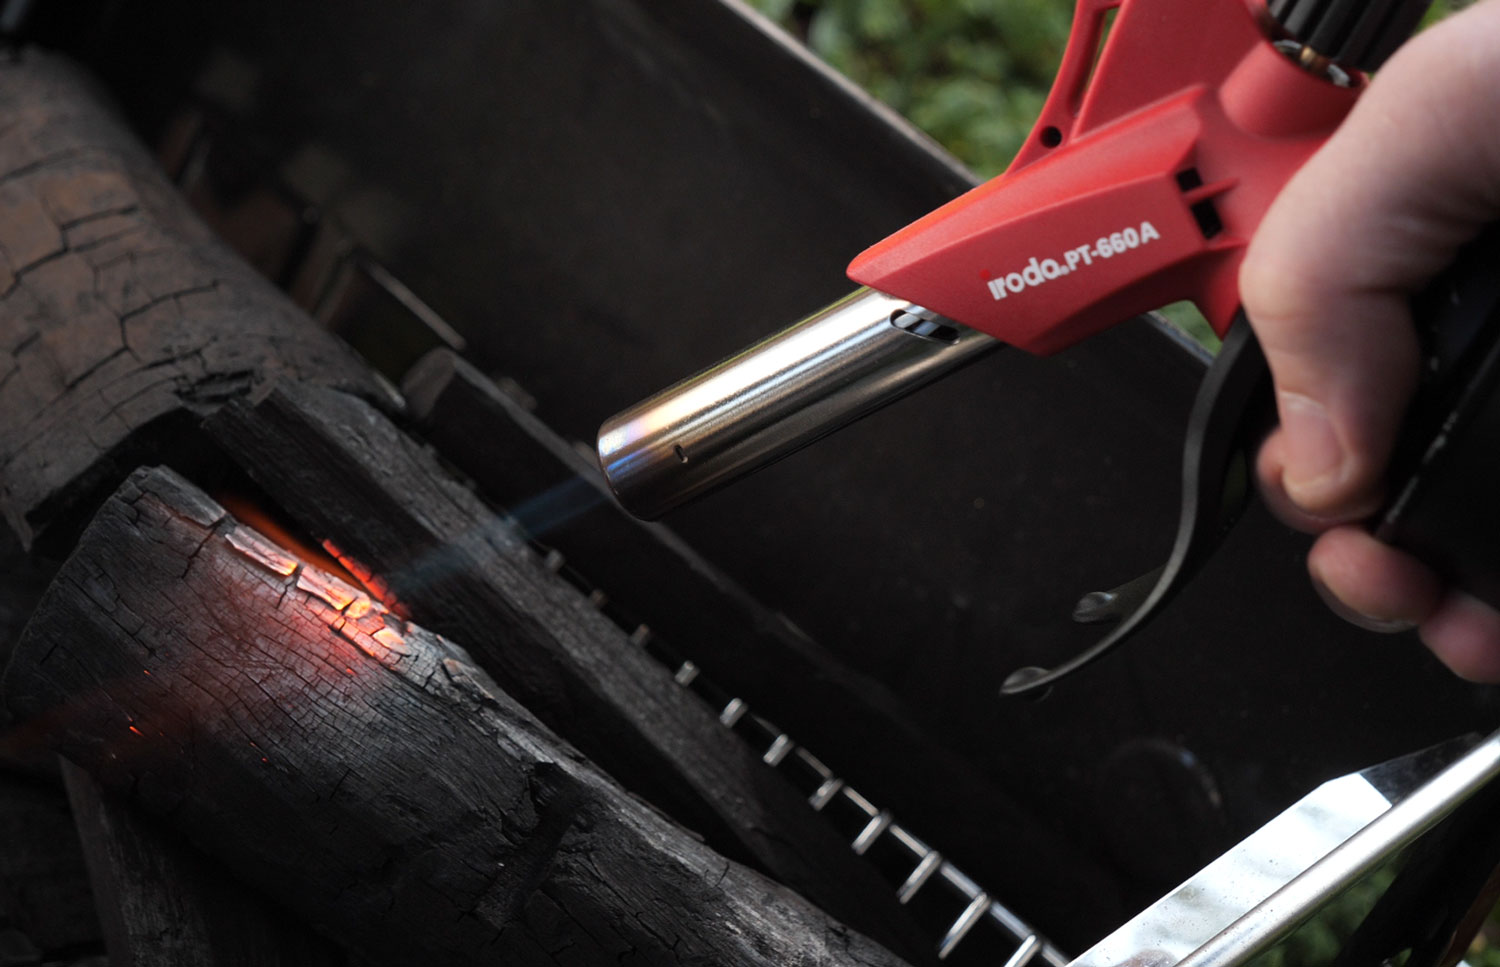 Using PT-600W Butane Cartridge Torch to start lighting charcoal